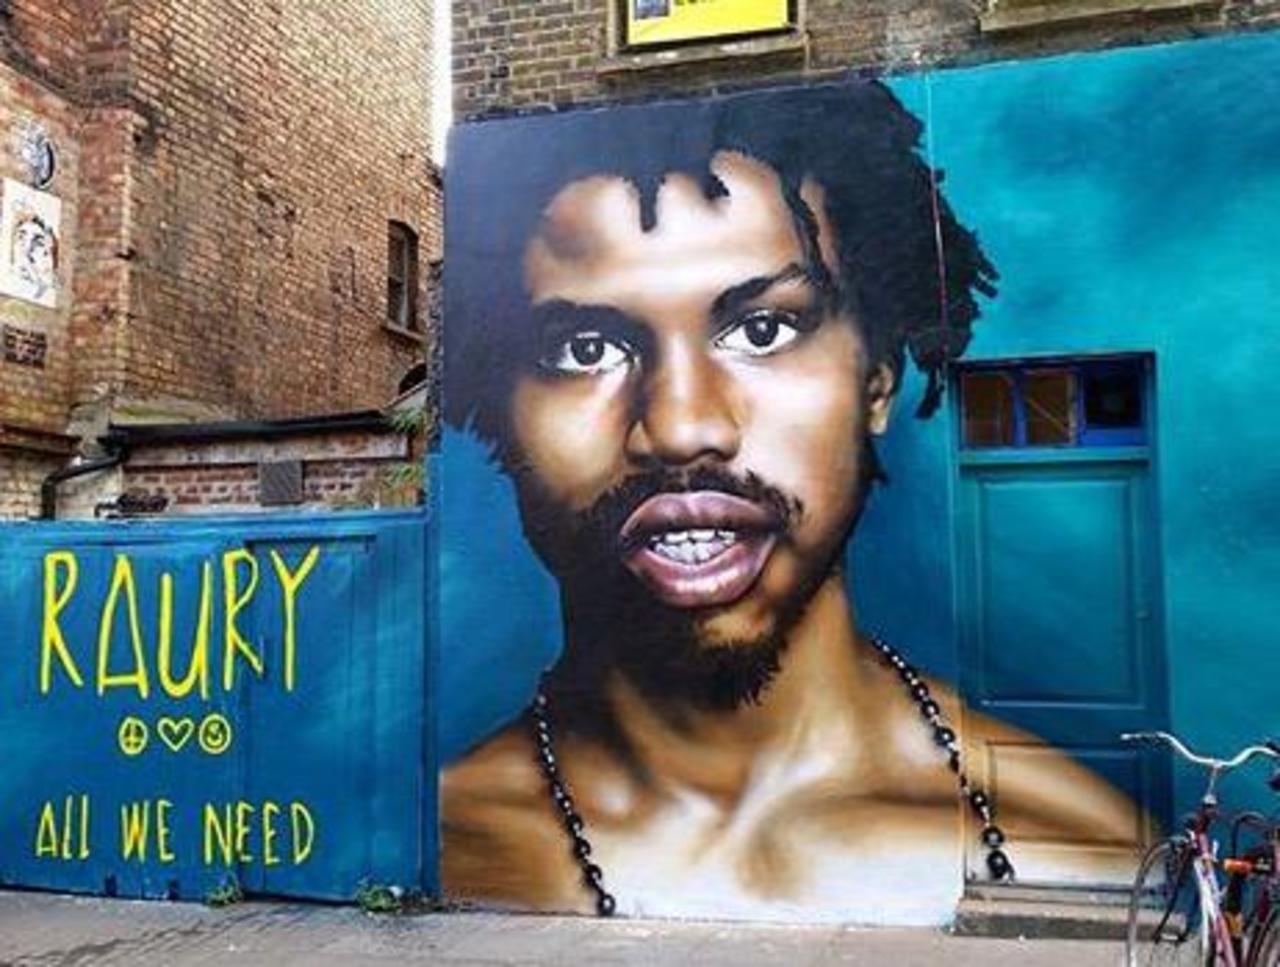 New Street Art of Raury by Olliver Switch in Brick Lane 

#art #graffiti #mural #streetart http://t.co/ttzBcWynCj